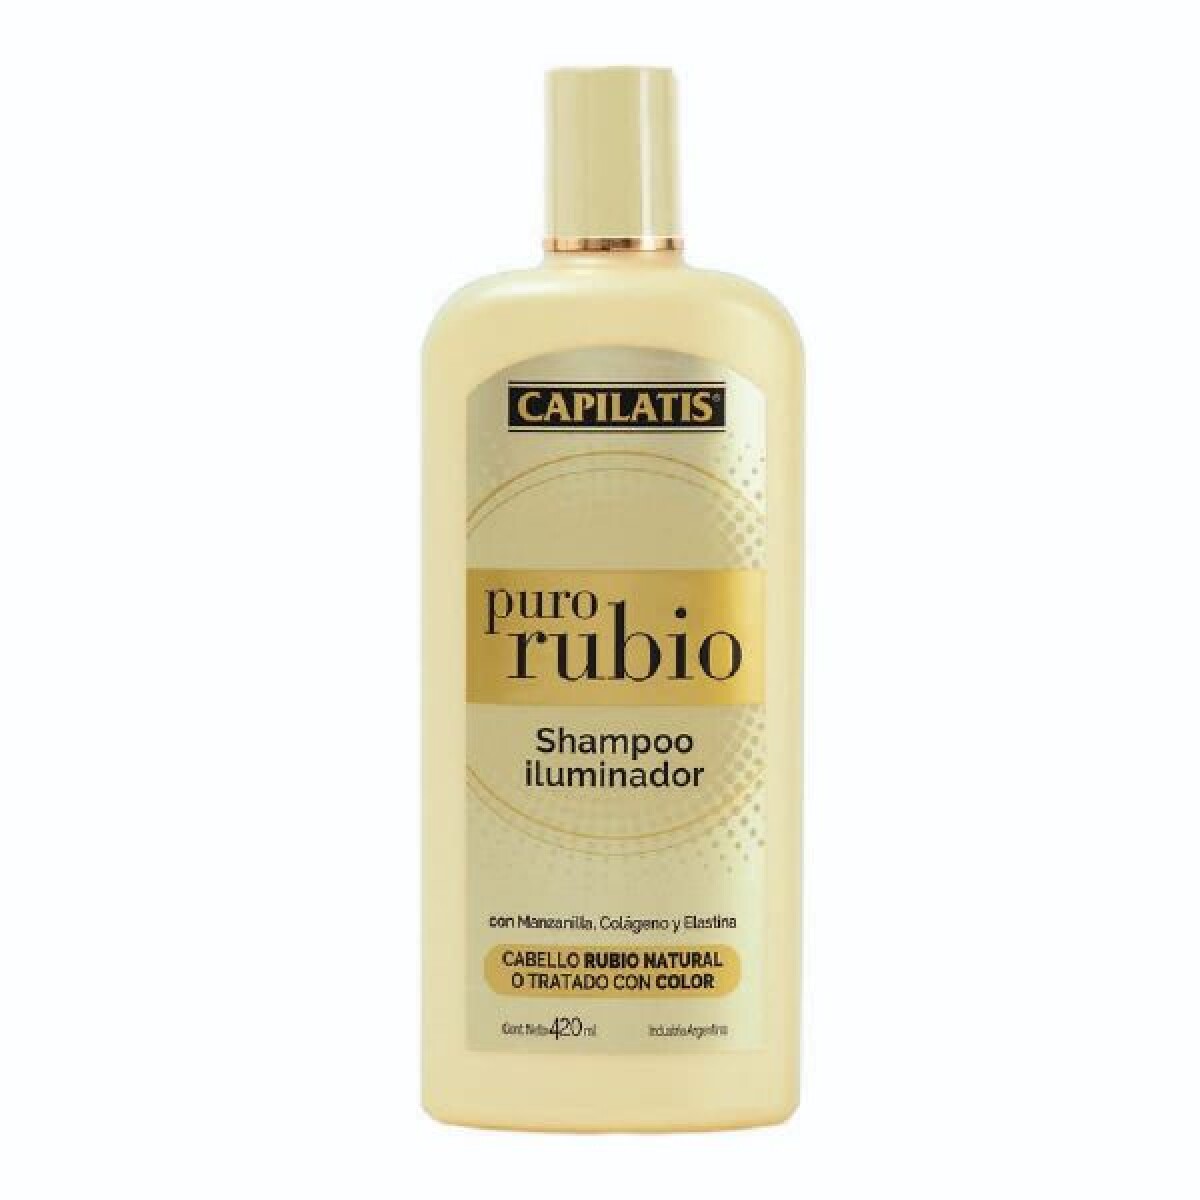 Shampoo Capilatis Puro Rubio Iluminador 410 ml 